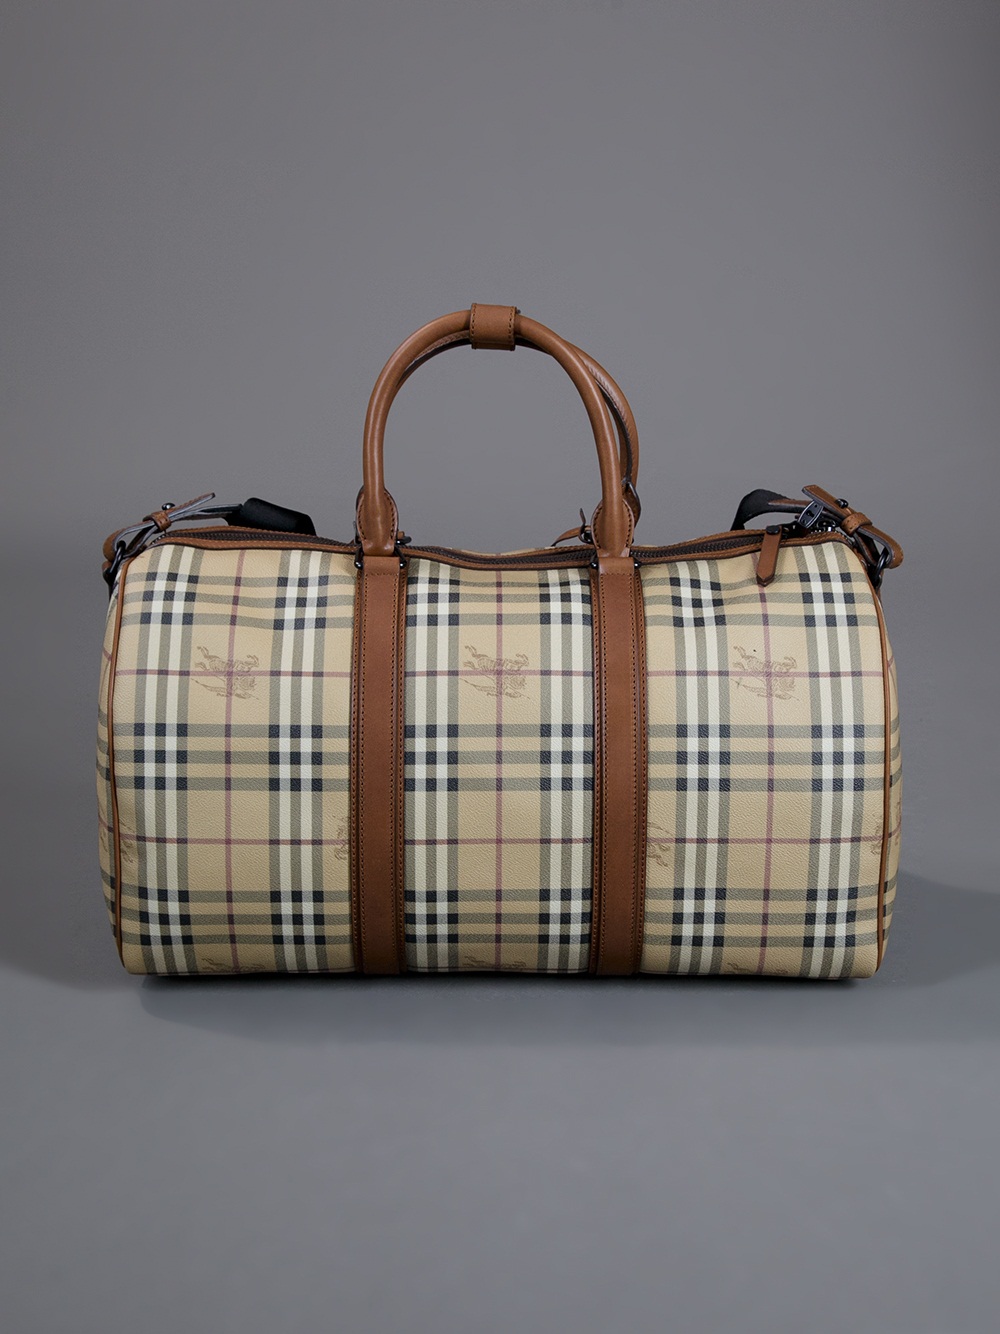 Burberry Haymarket Holdall Bag in Beige (Brown) for Men - Lyst